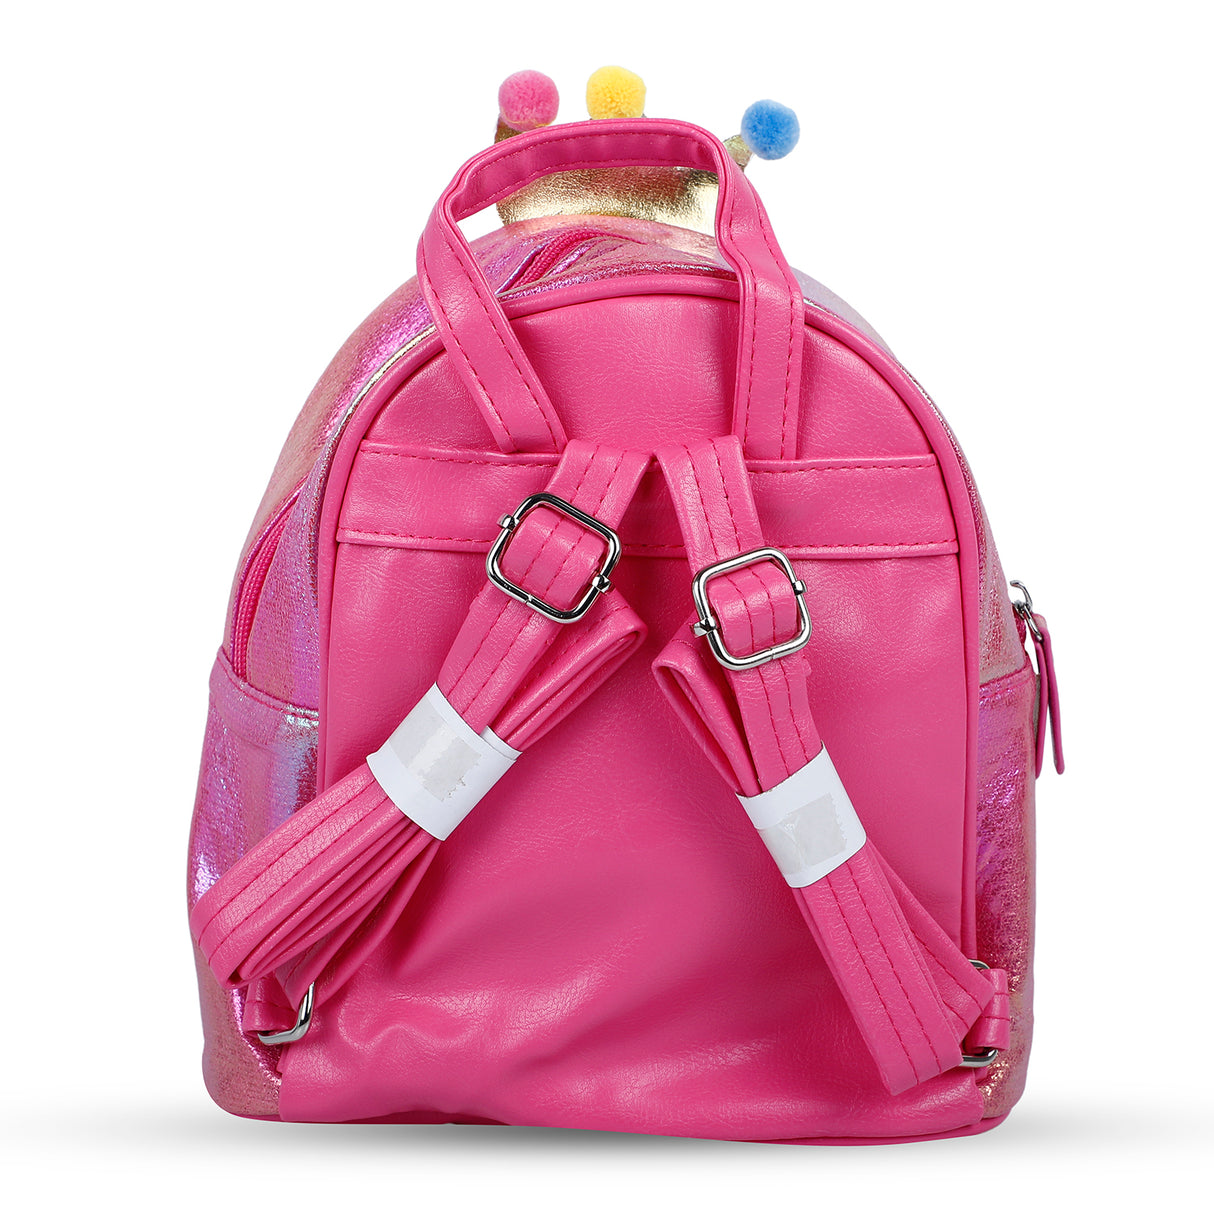 Unicorn Backpack Bag